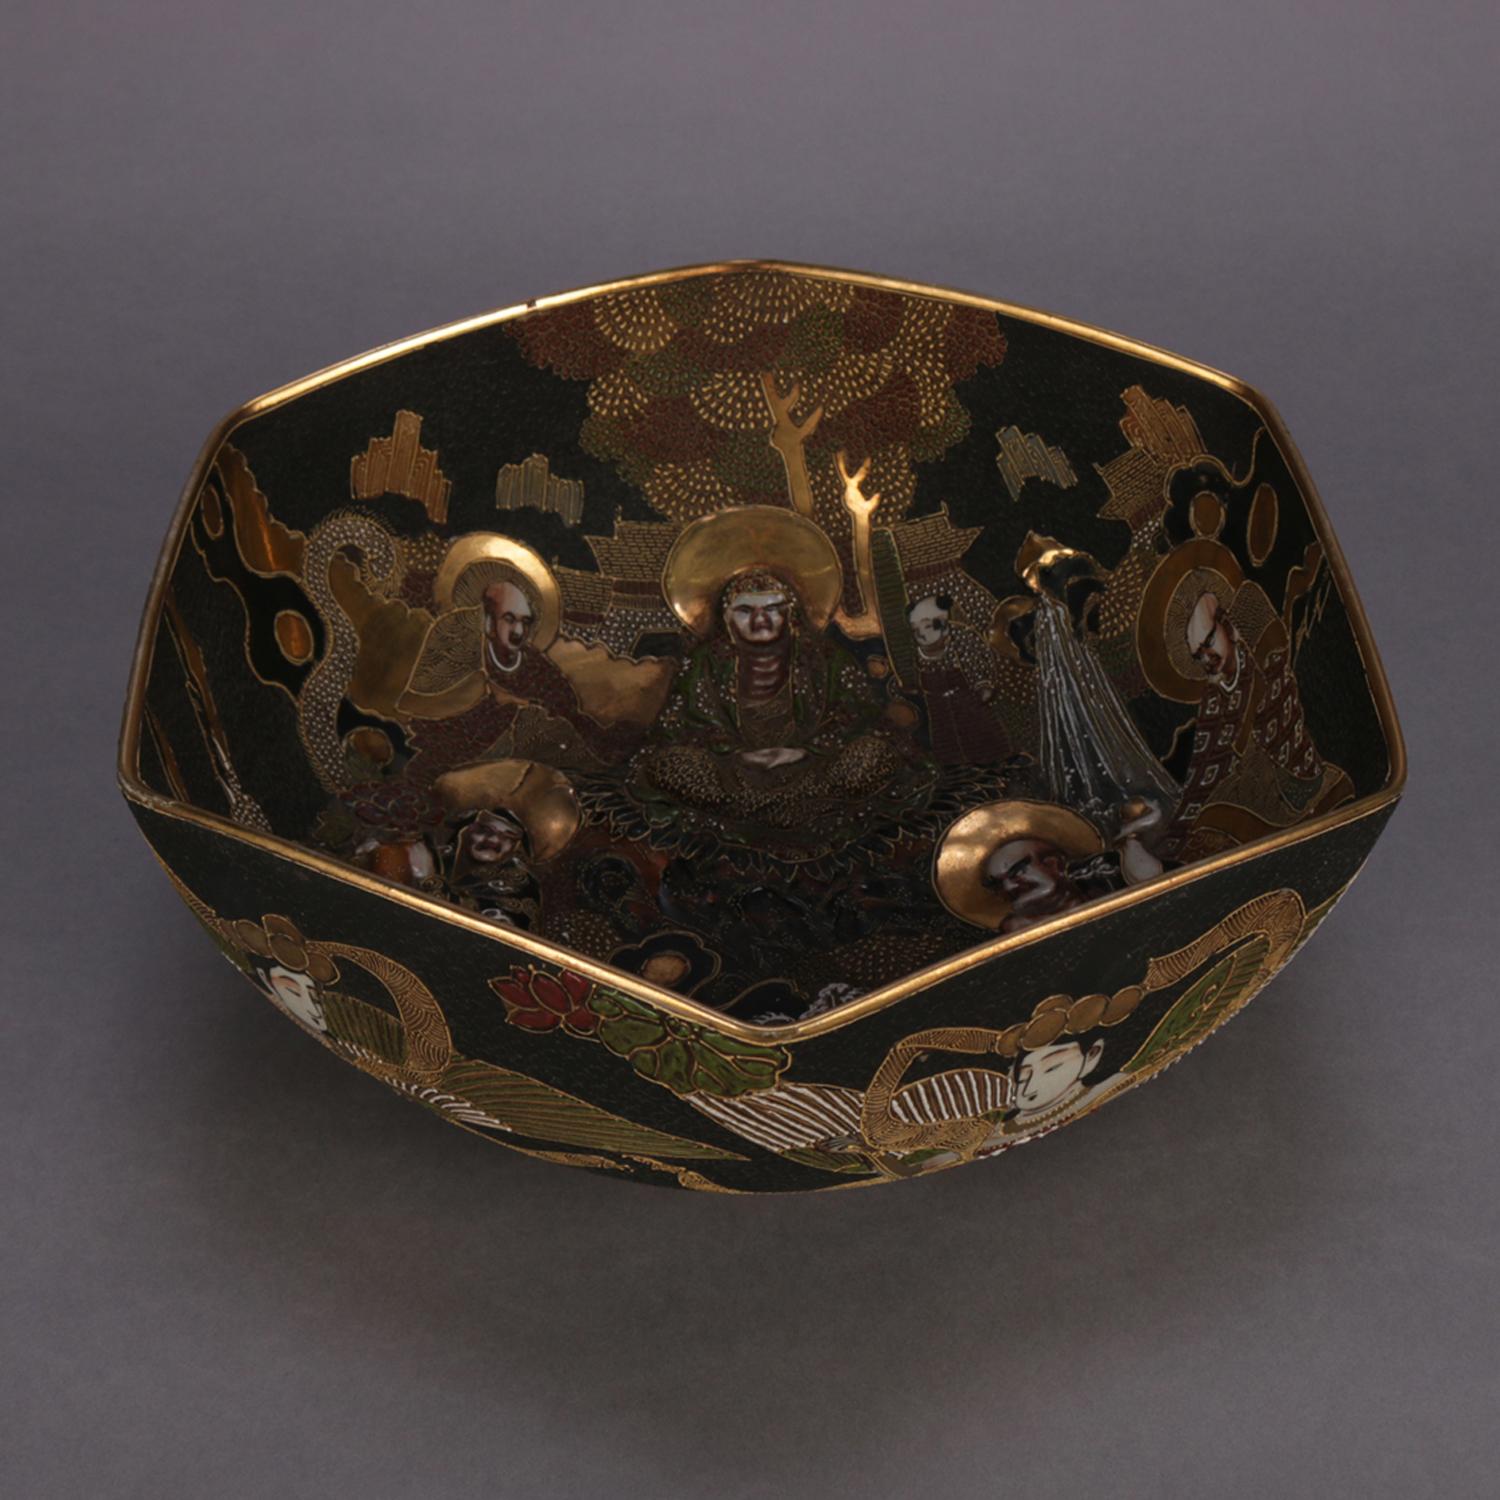 Gilt Antique Large Japanese Satsuma Bas Relief Porcelain Center Bowl with Figures